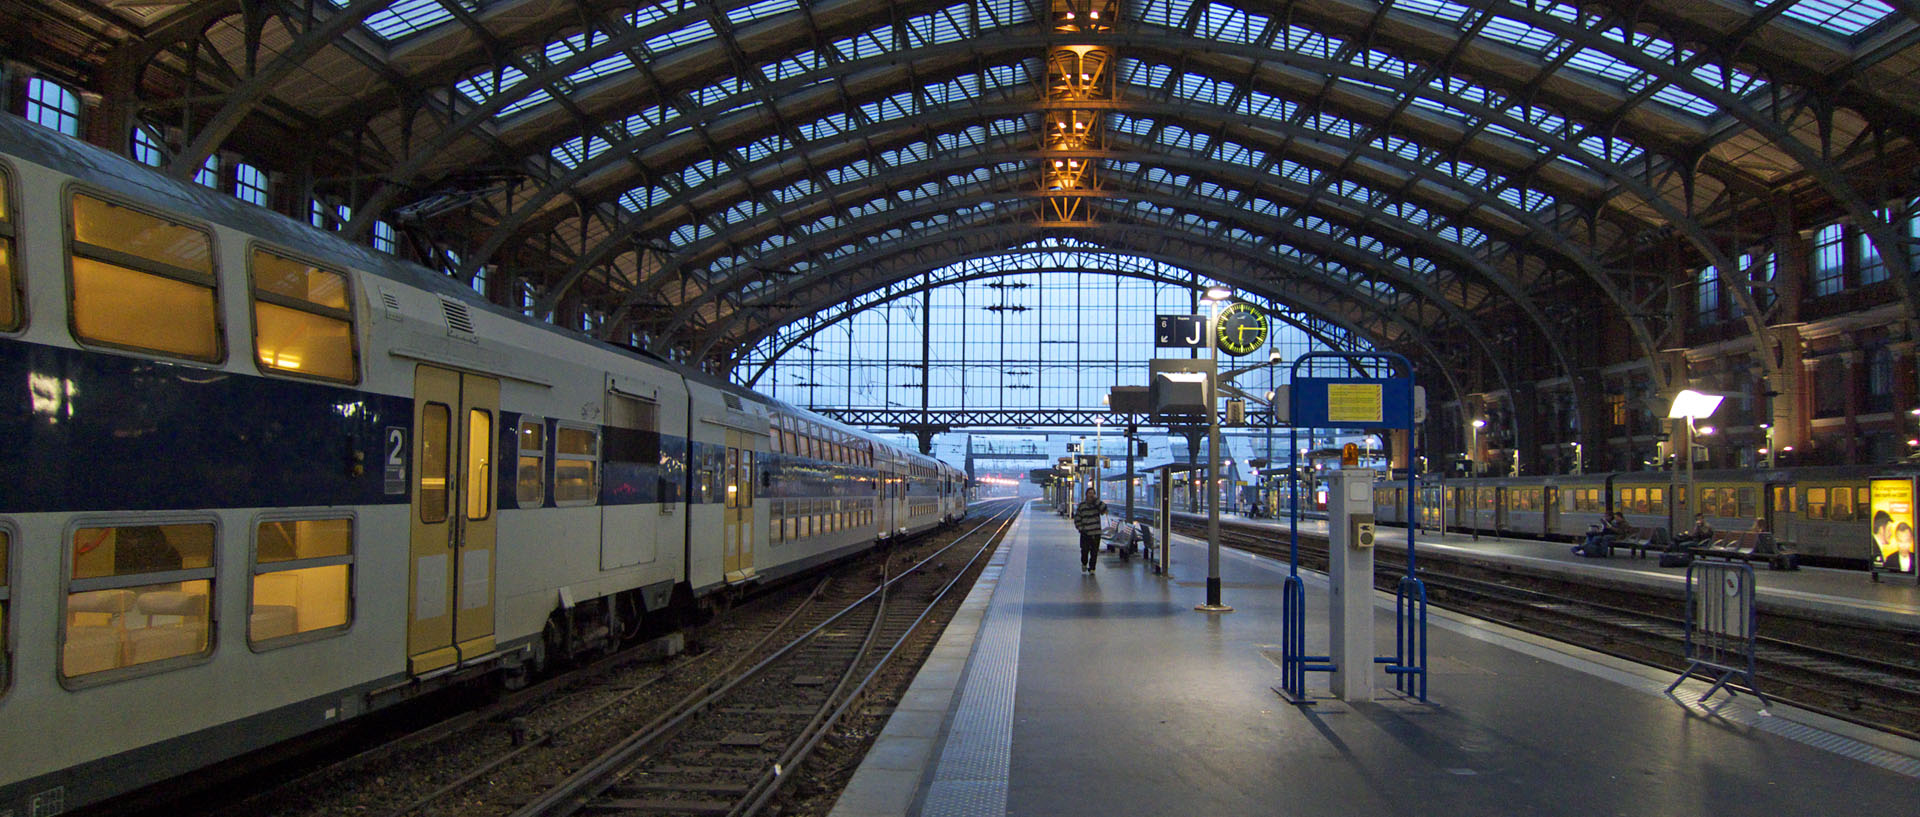 Vendredi 24 octobre 2008 (5), gare Lille Flandres.